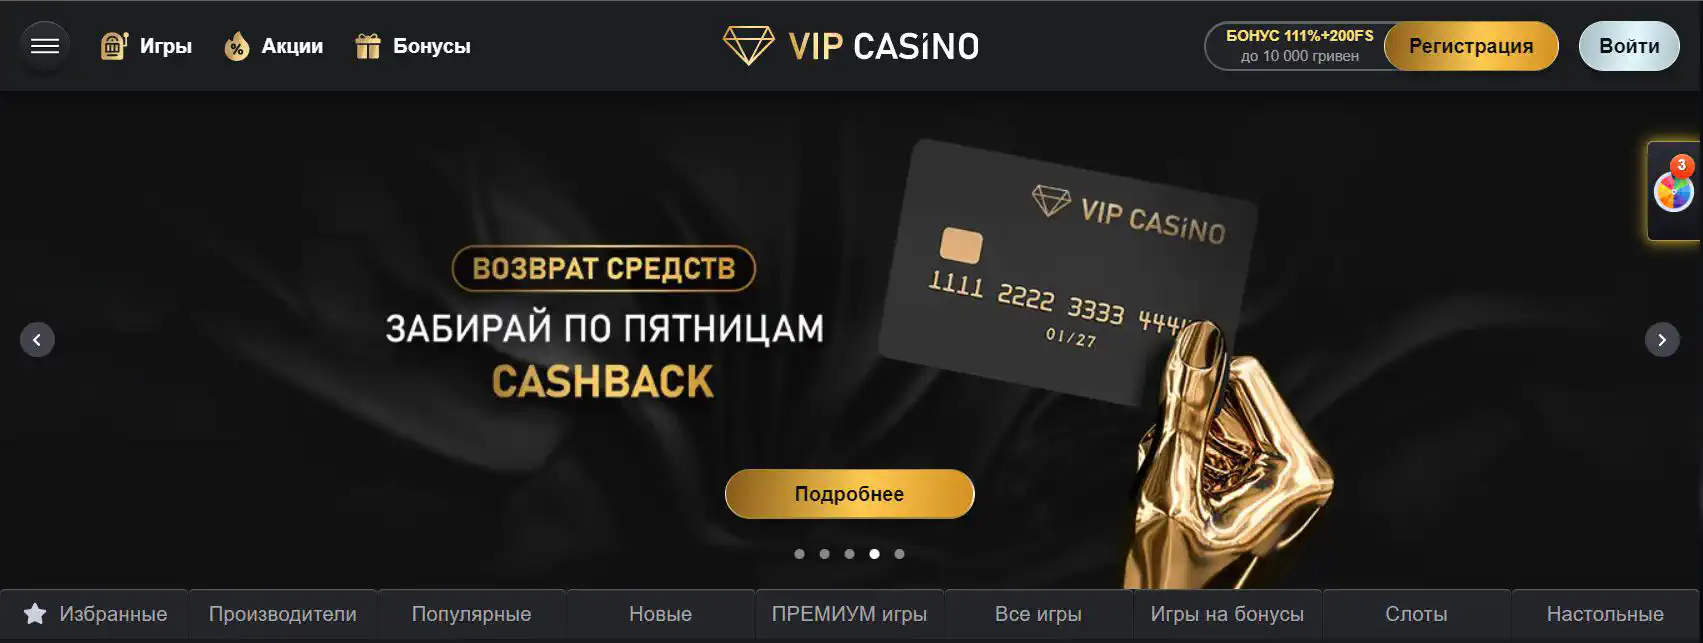 Vip casino site